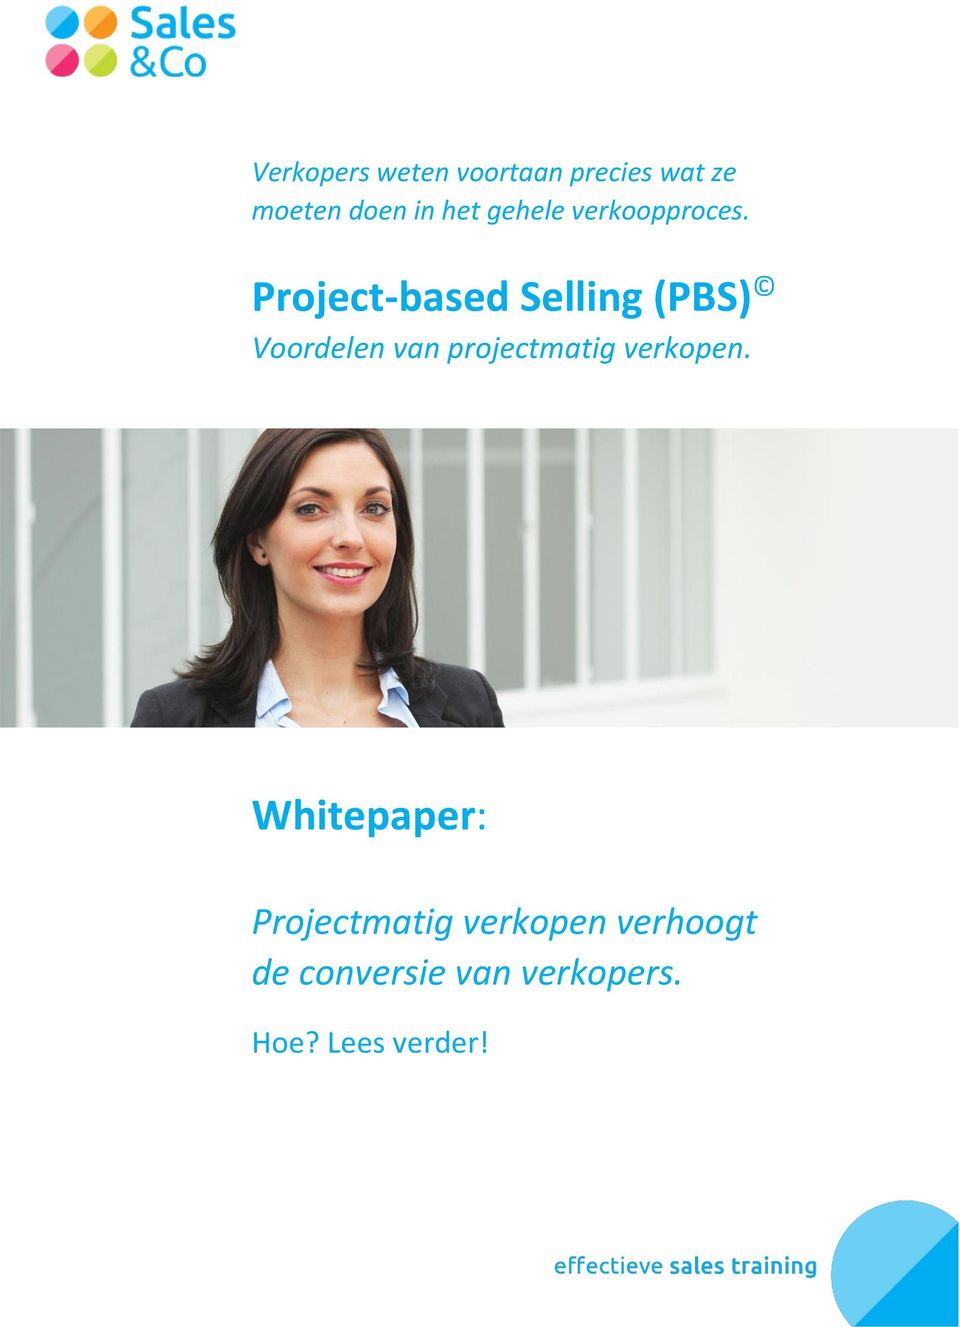 Project-based Selling (PBS) Voordelen van projectmatig